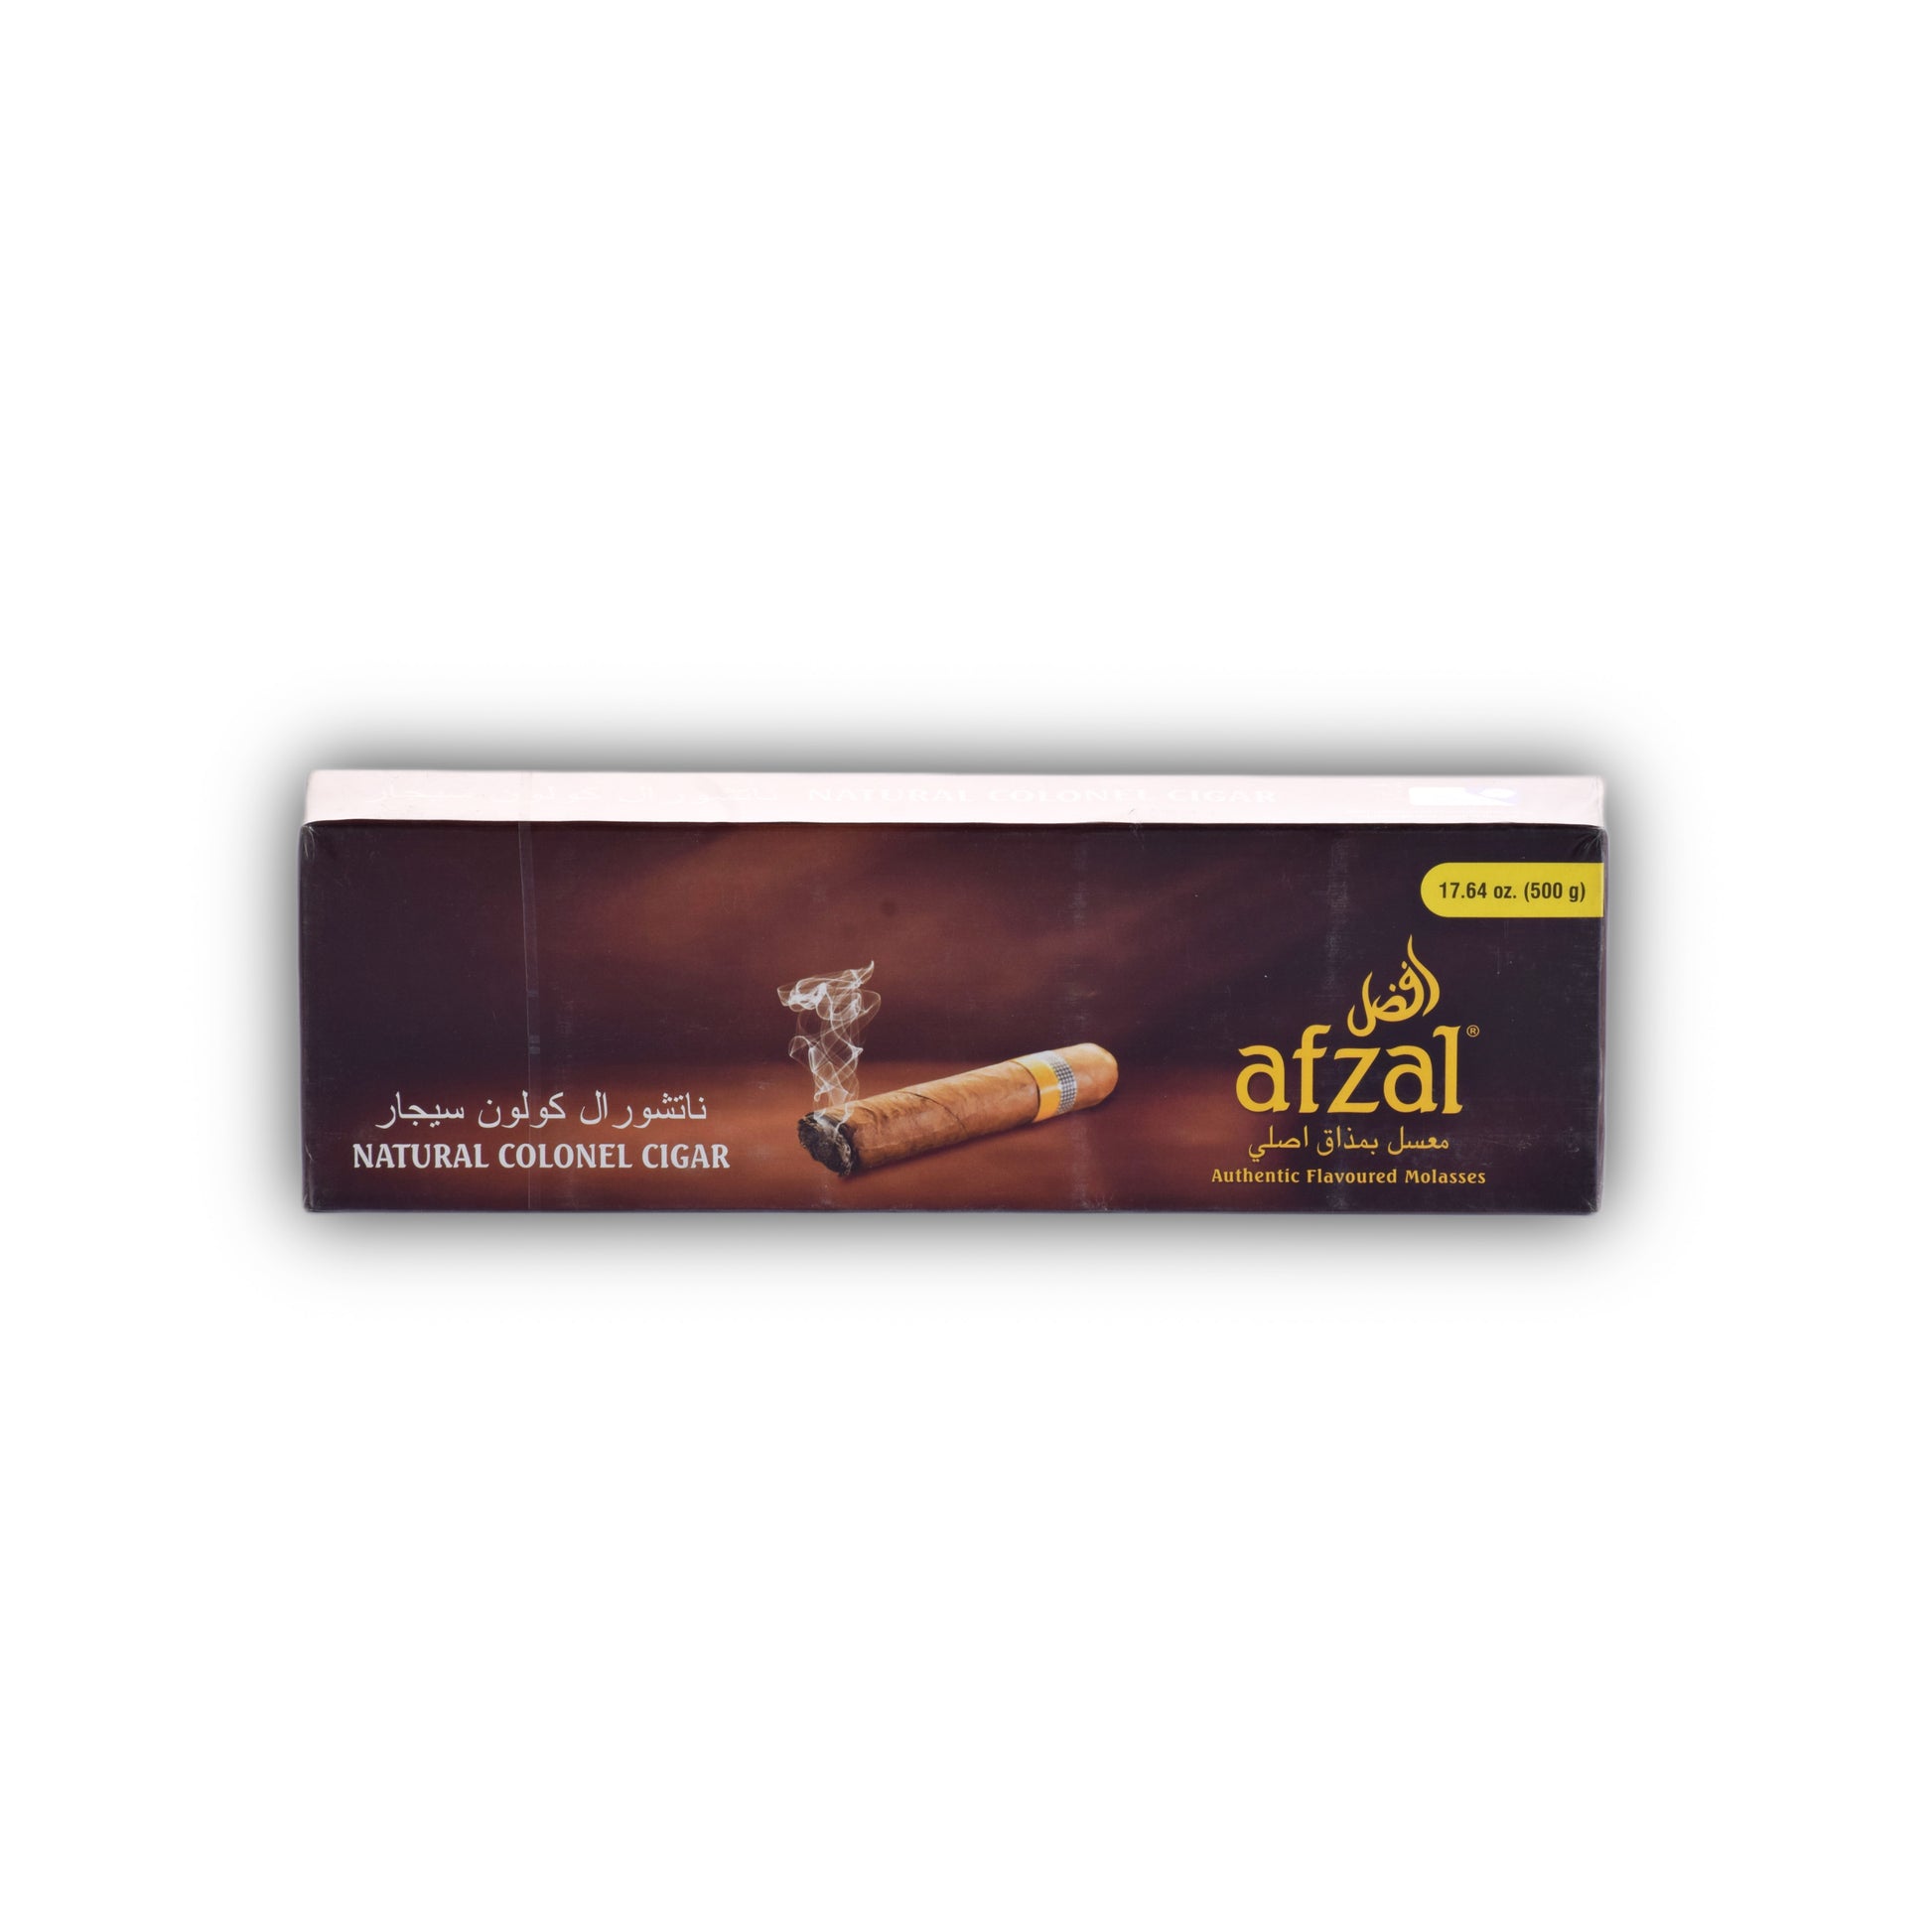 afzal hookah flavor danda wholesale price natural colonel cigar